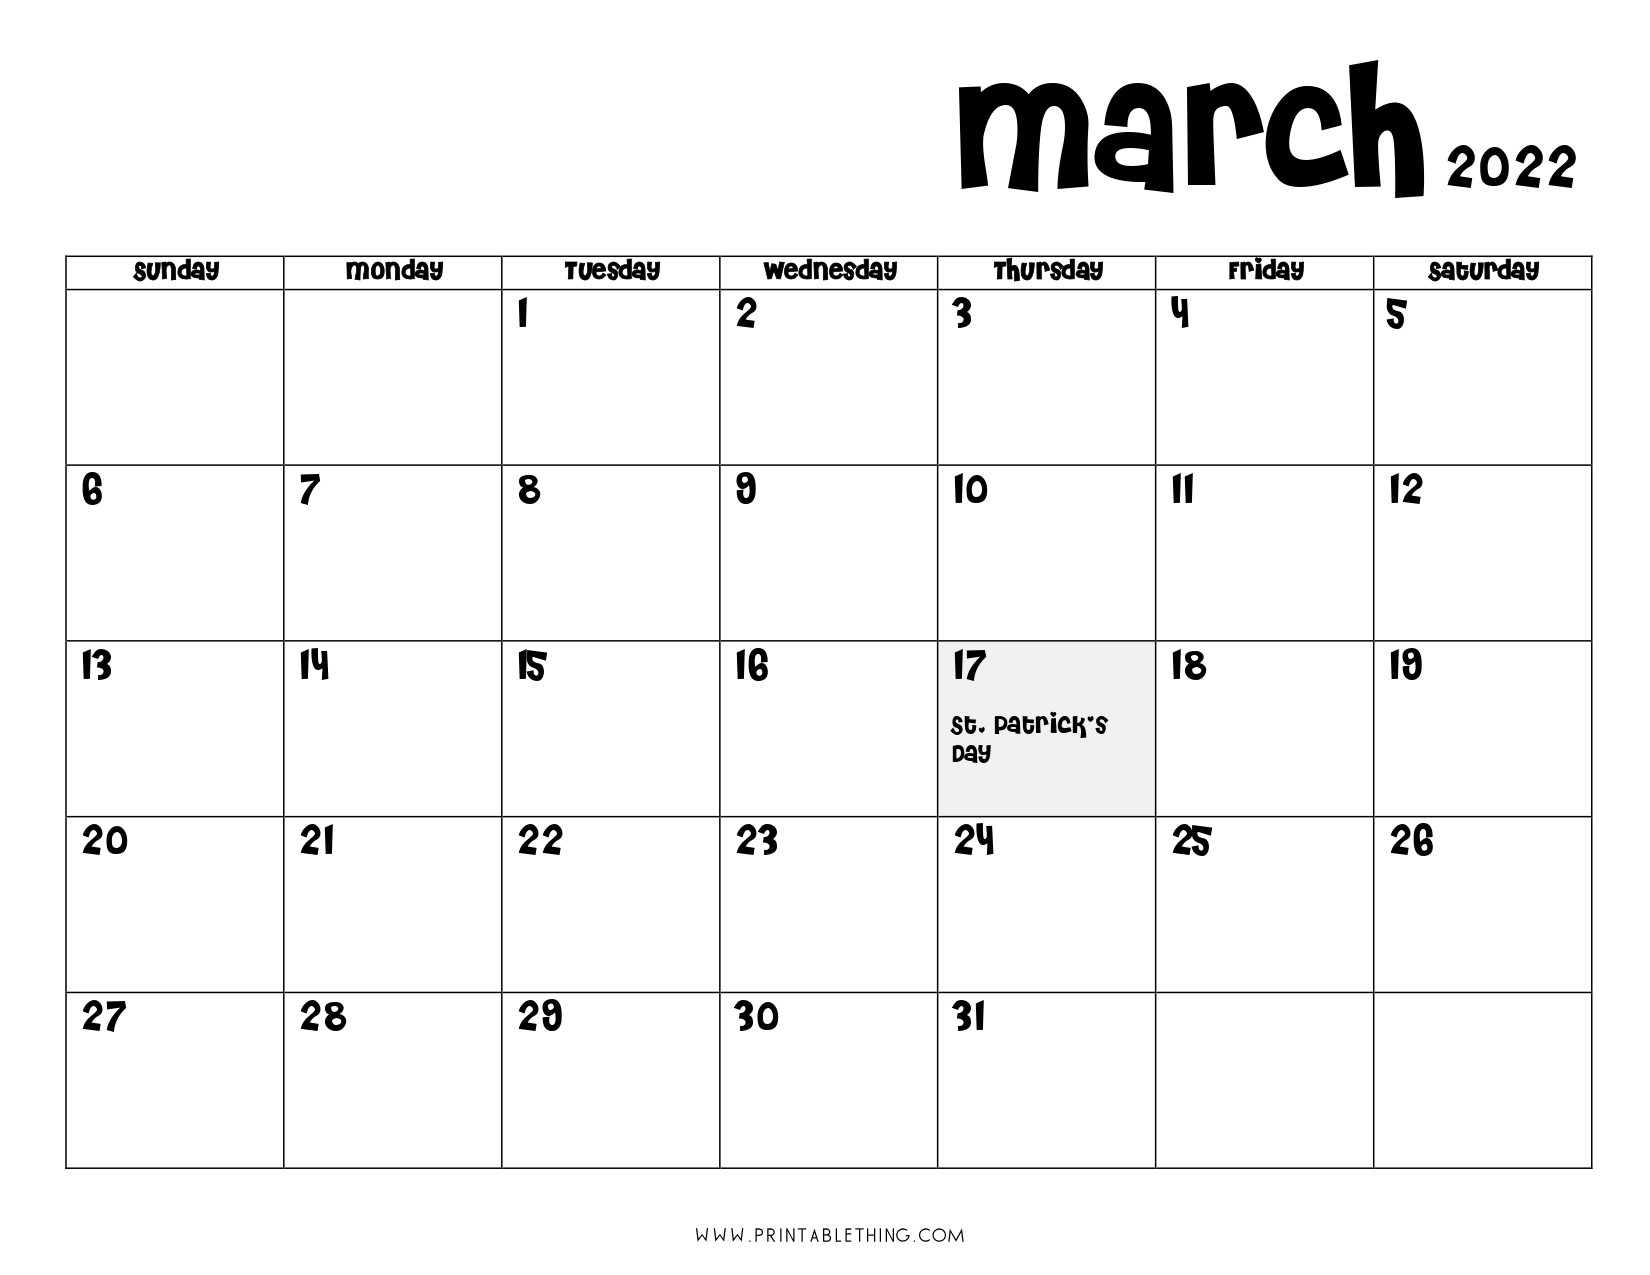 March 2022 Calendar Printable, Pdf, Us Holidays, Blank  Printable Calendar April 2022 To March 2022